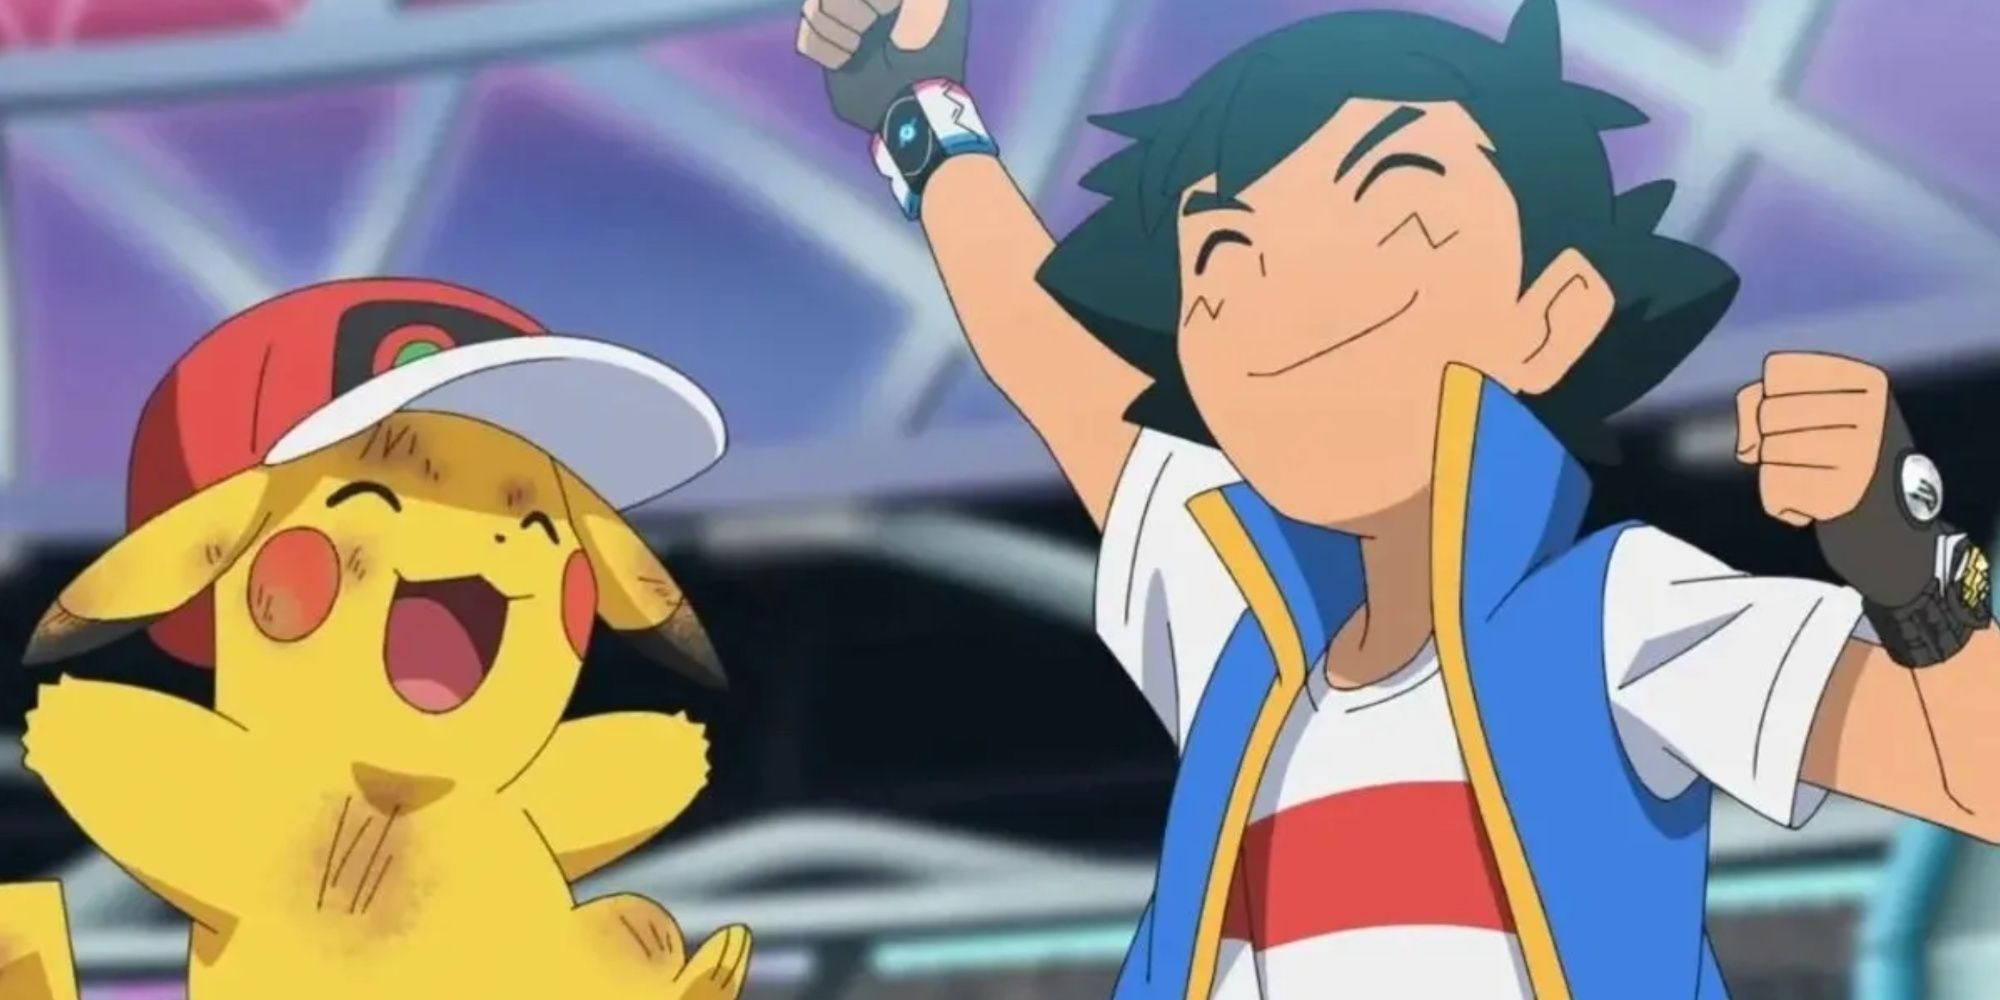 ash and pikachu celebrating in the pokemon anime